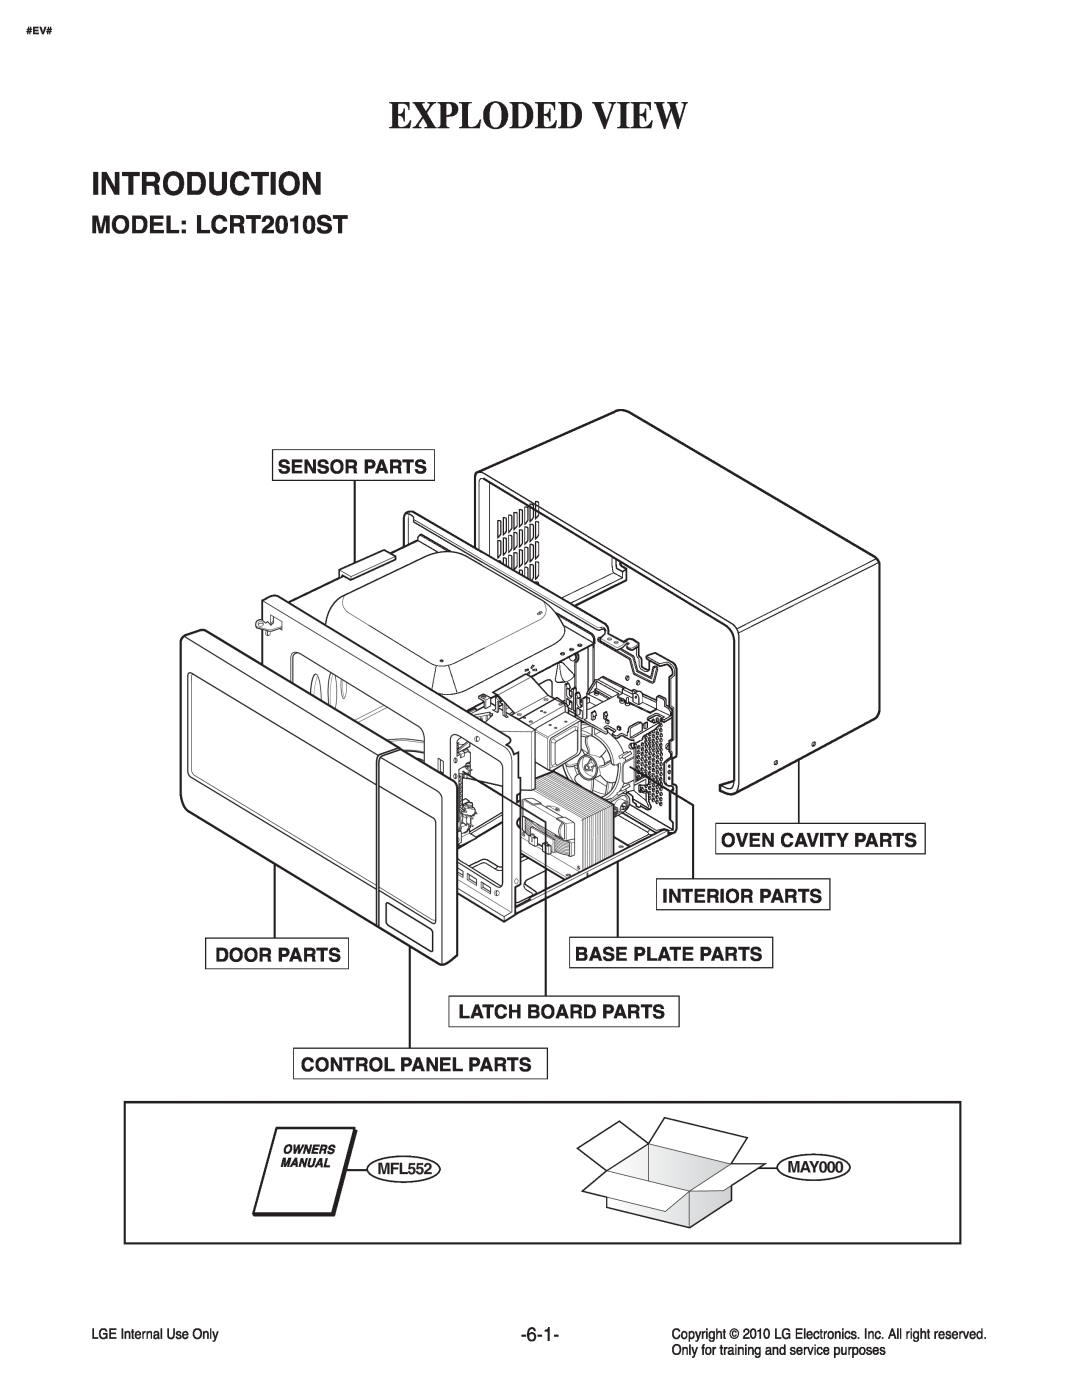 Frigidaire LCRT2010ST Exploded View, Introduction, Model, Sensor Parts, Oven Cavity Parts, Interior Parts, Door Parts 